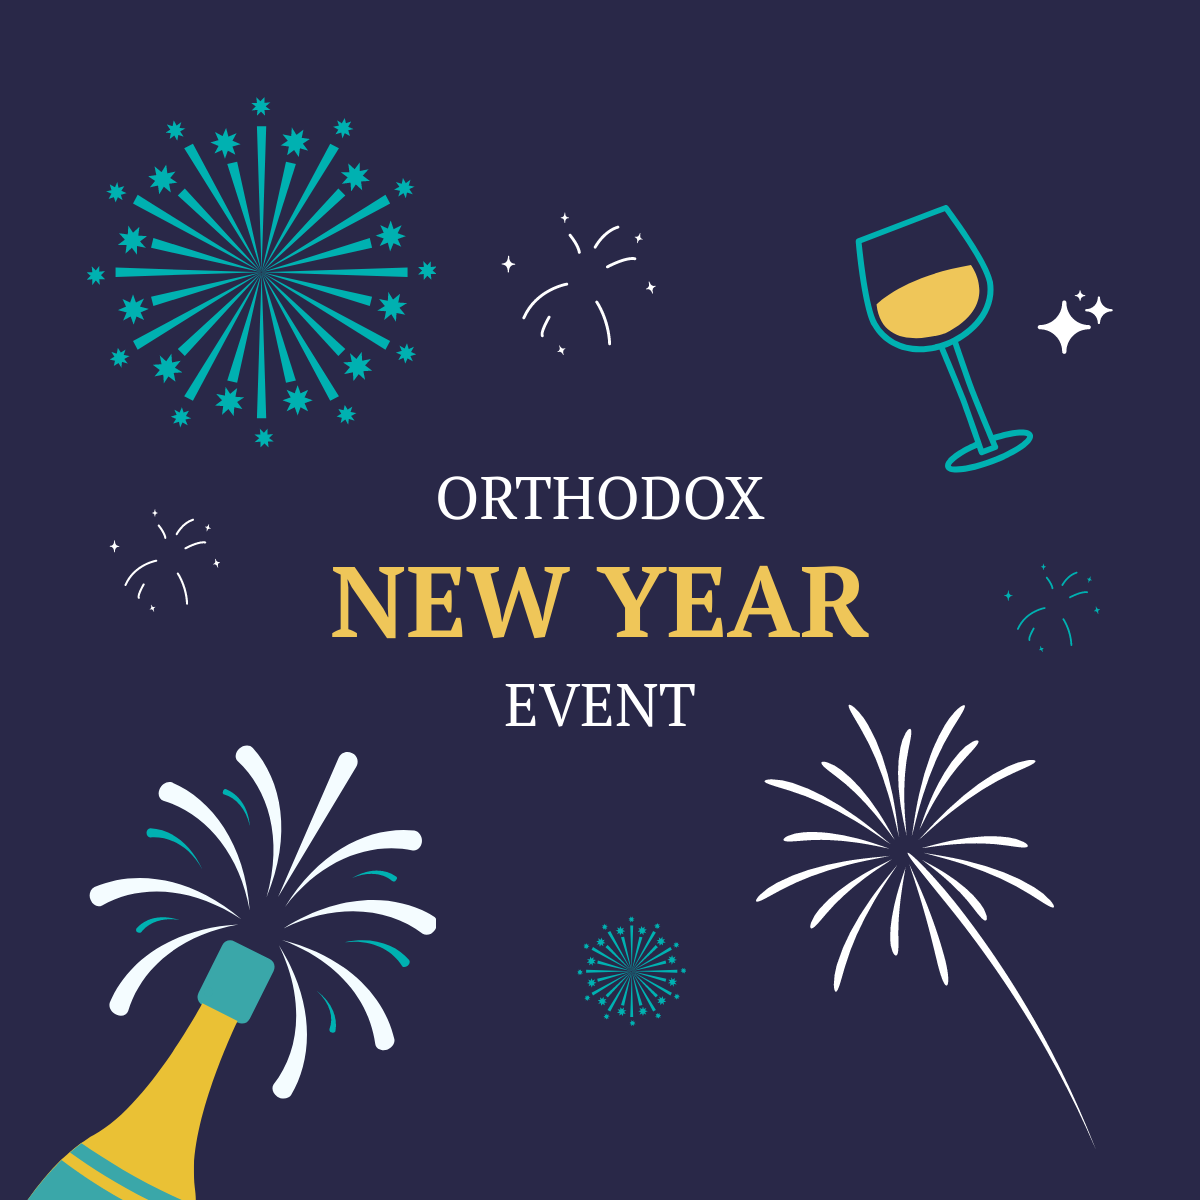 Orthodox New Year Event Linkedin Post